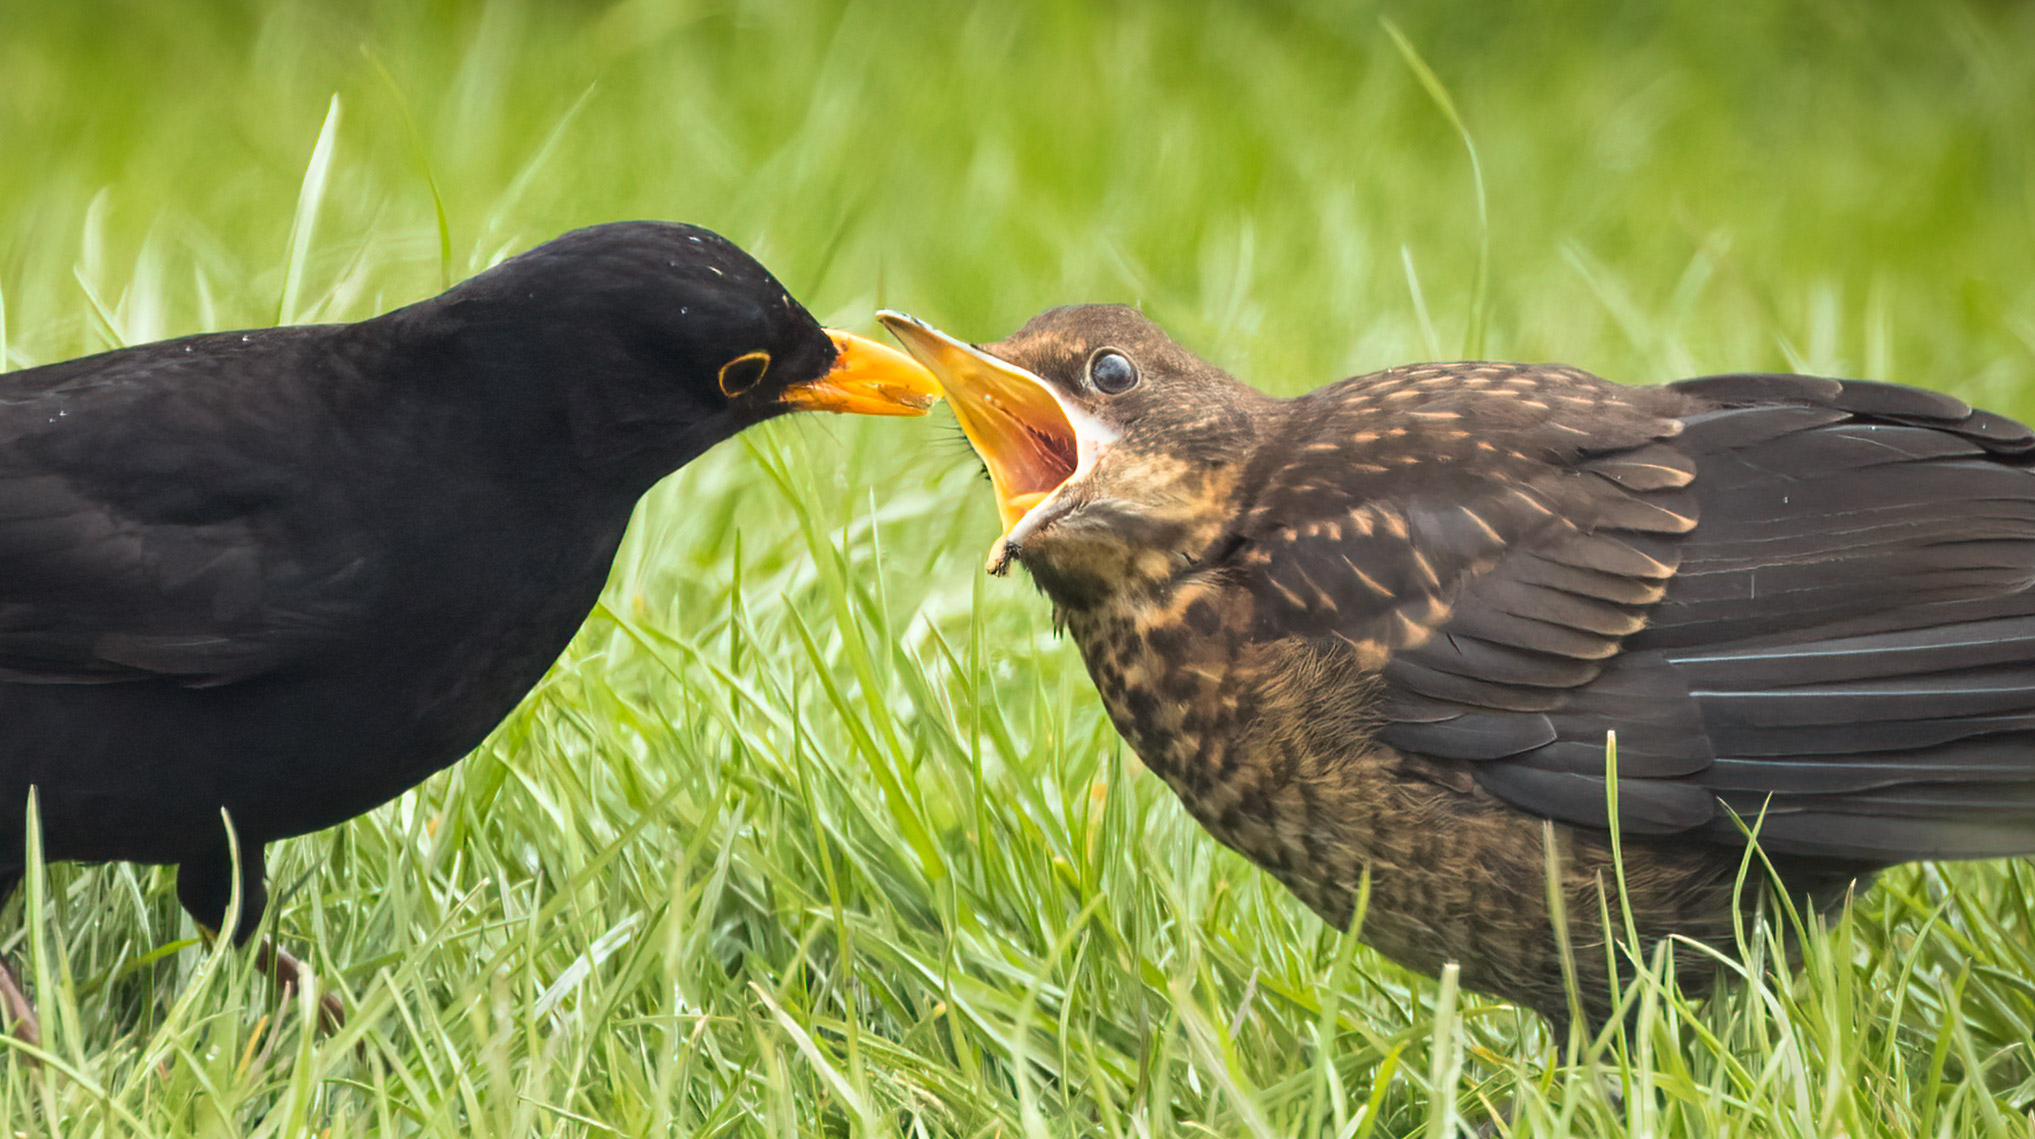 Male Blackbird feeding young.jpeg